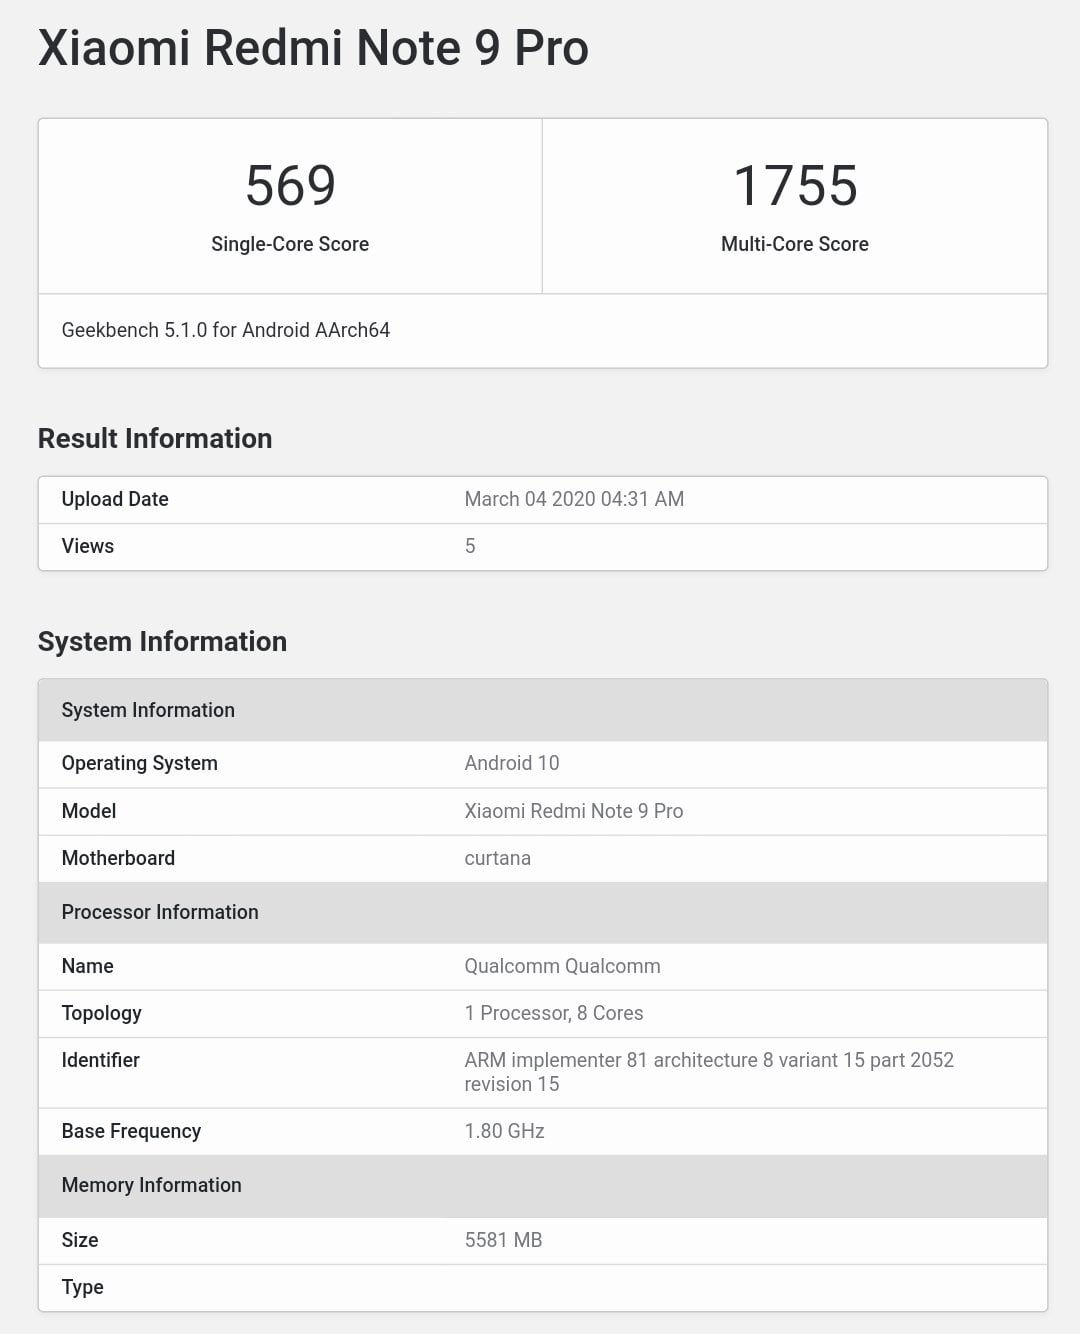 Redmi Note 9 Pro on Geekbench